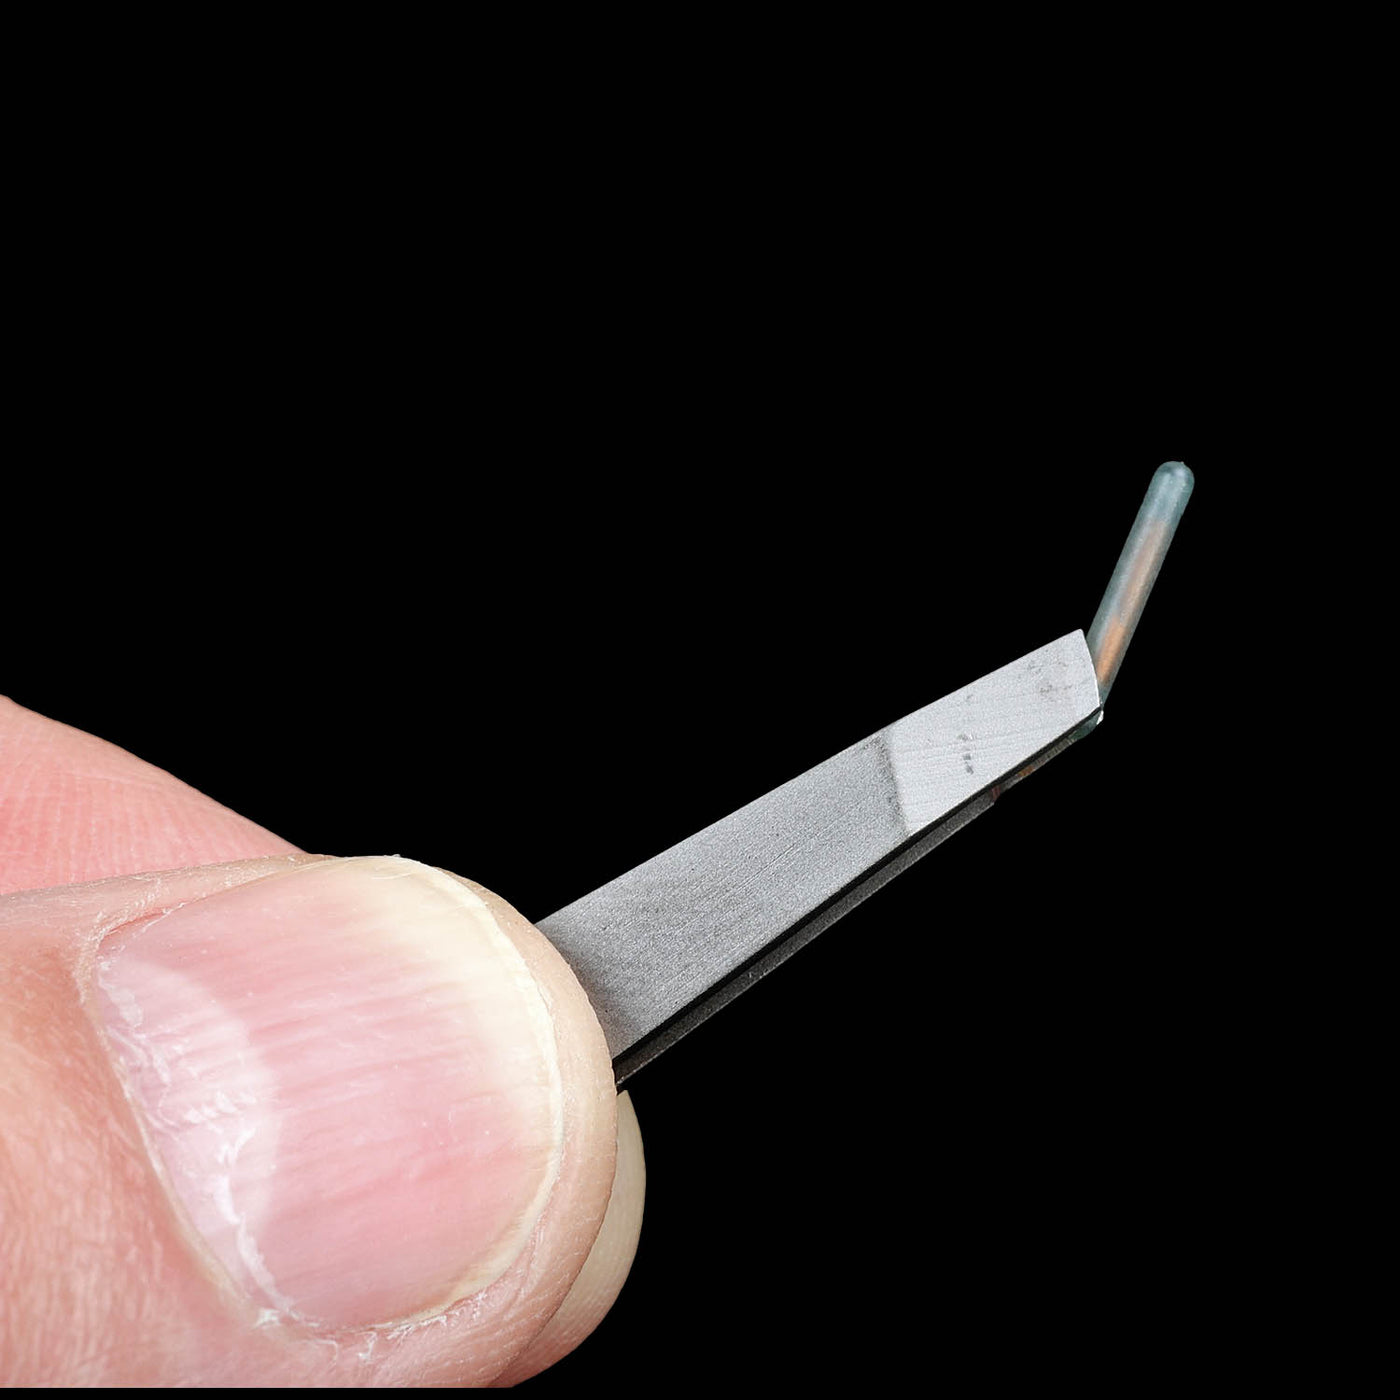 AVID Microchip Implant